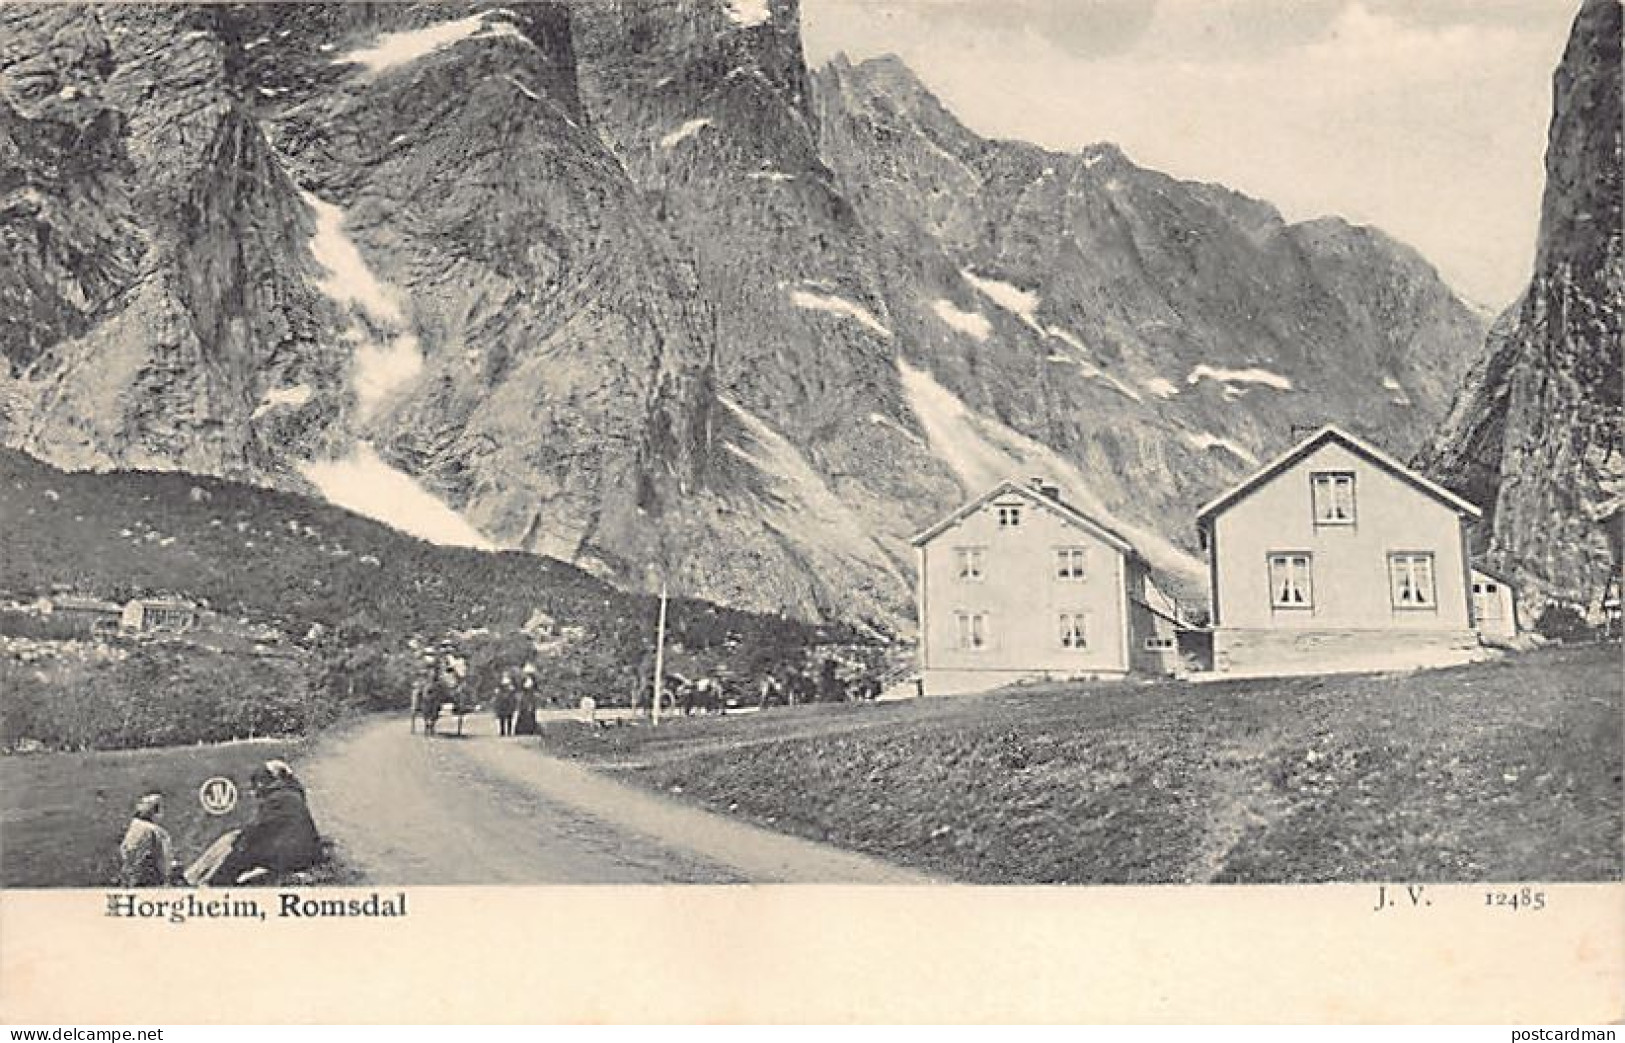 Norway - Horgheim, Romsdal - Publ. J. V. 12485 - Norway